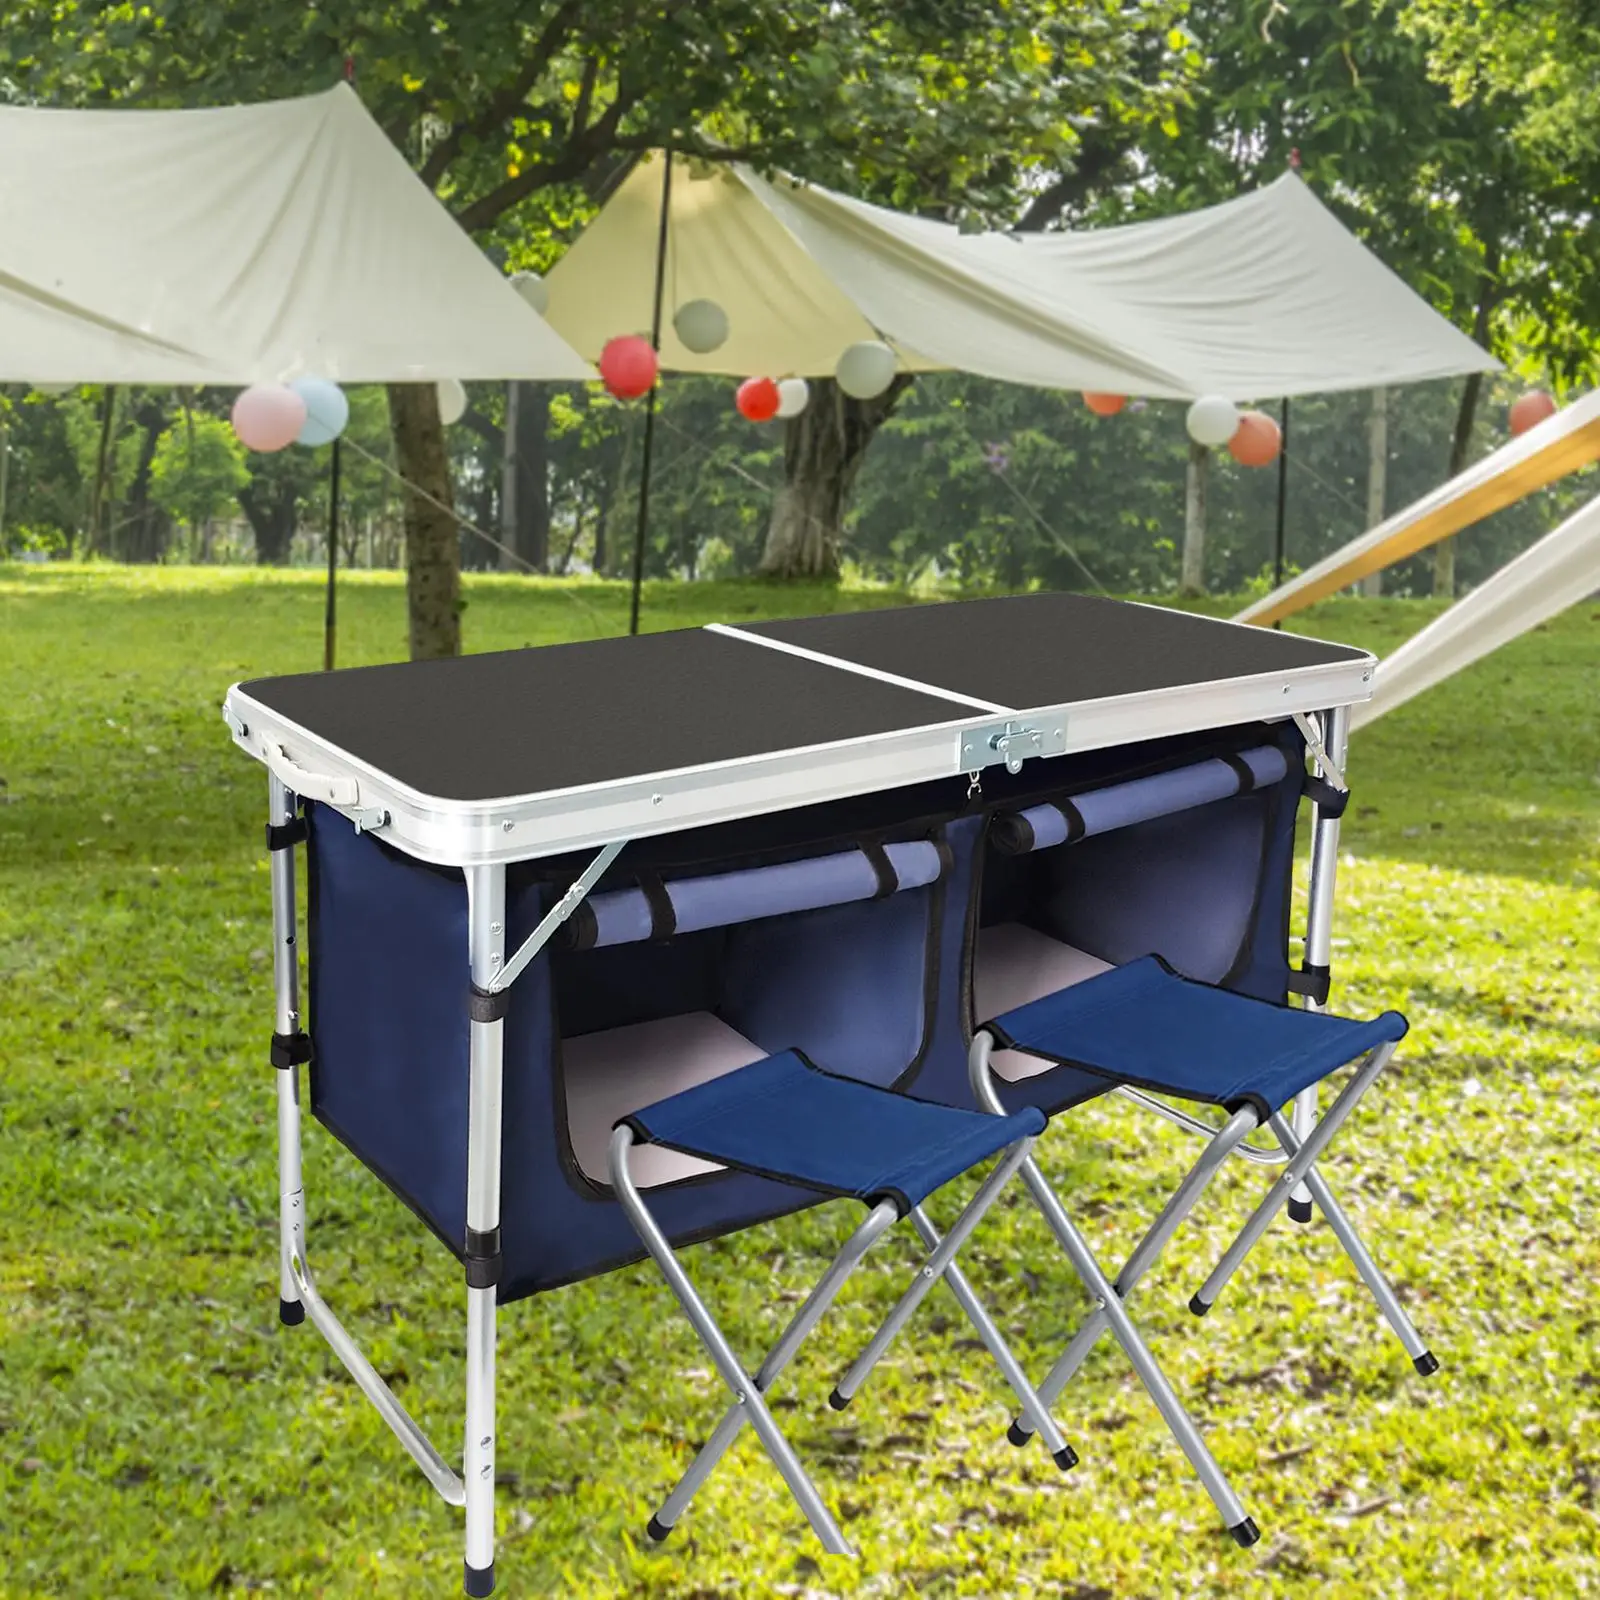 Portable Camping Table Rectangular Aluminum Alloy Garden Patio Furniture for Party, Outdoor Fishing, Beach, Backyards